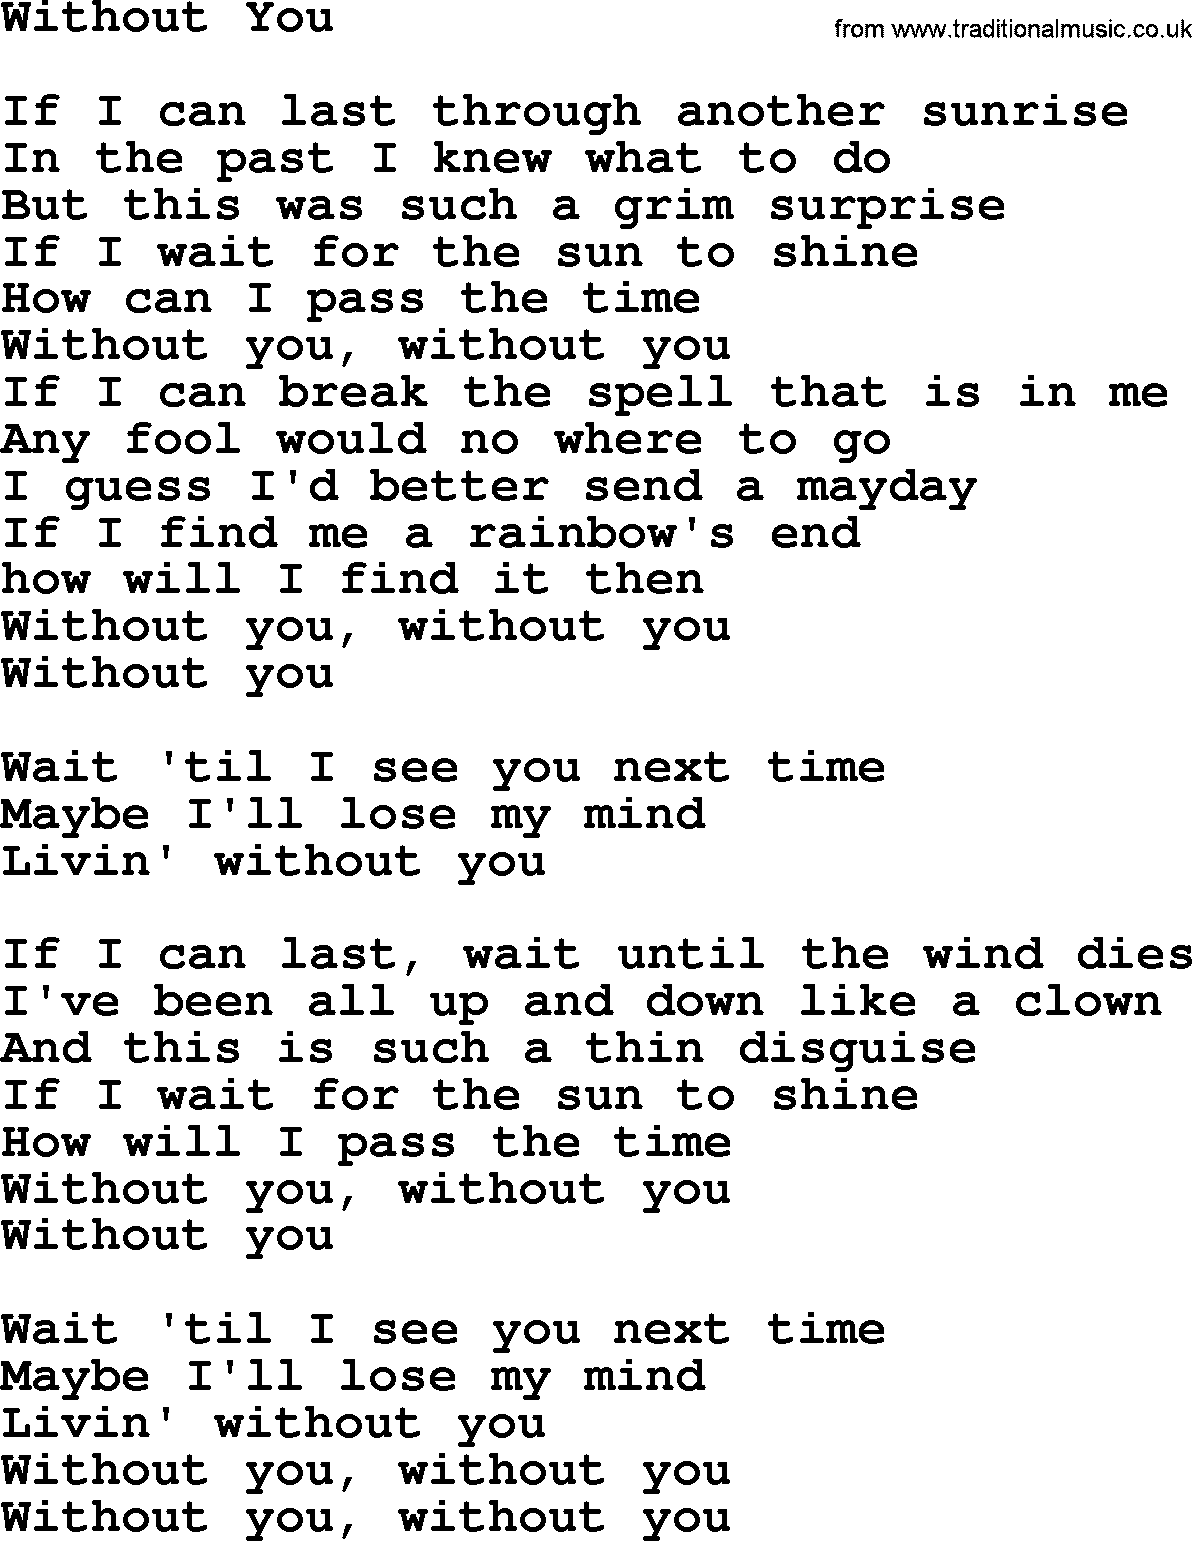 Gordon Lightfoot song Without You, lyrics